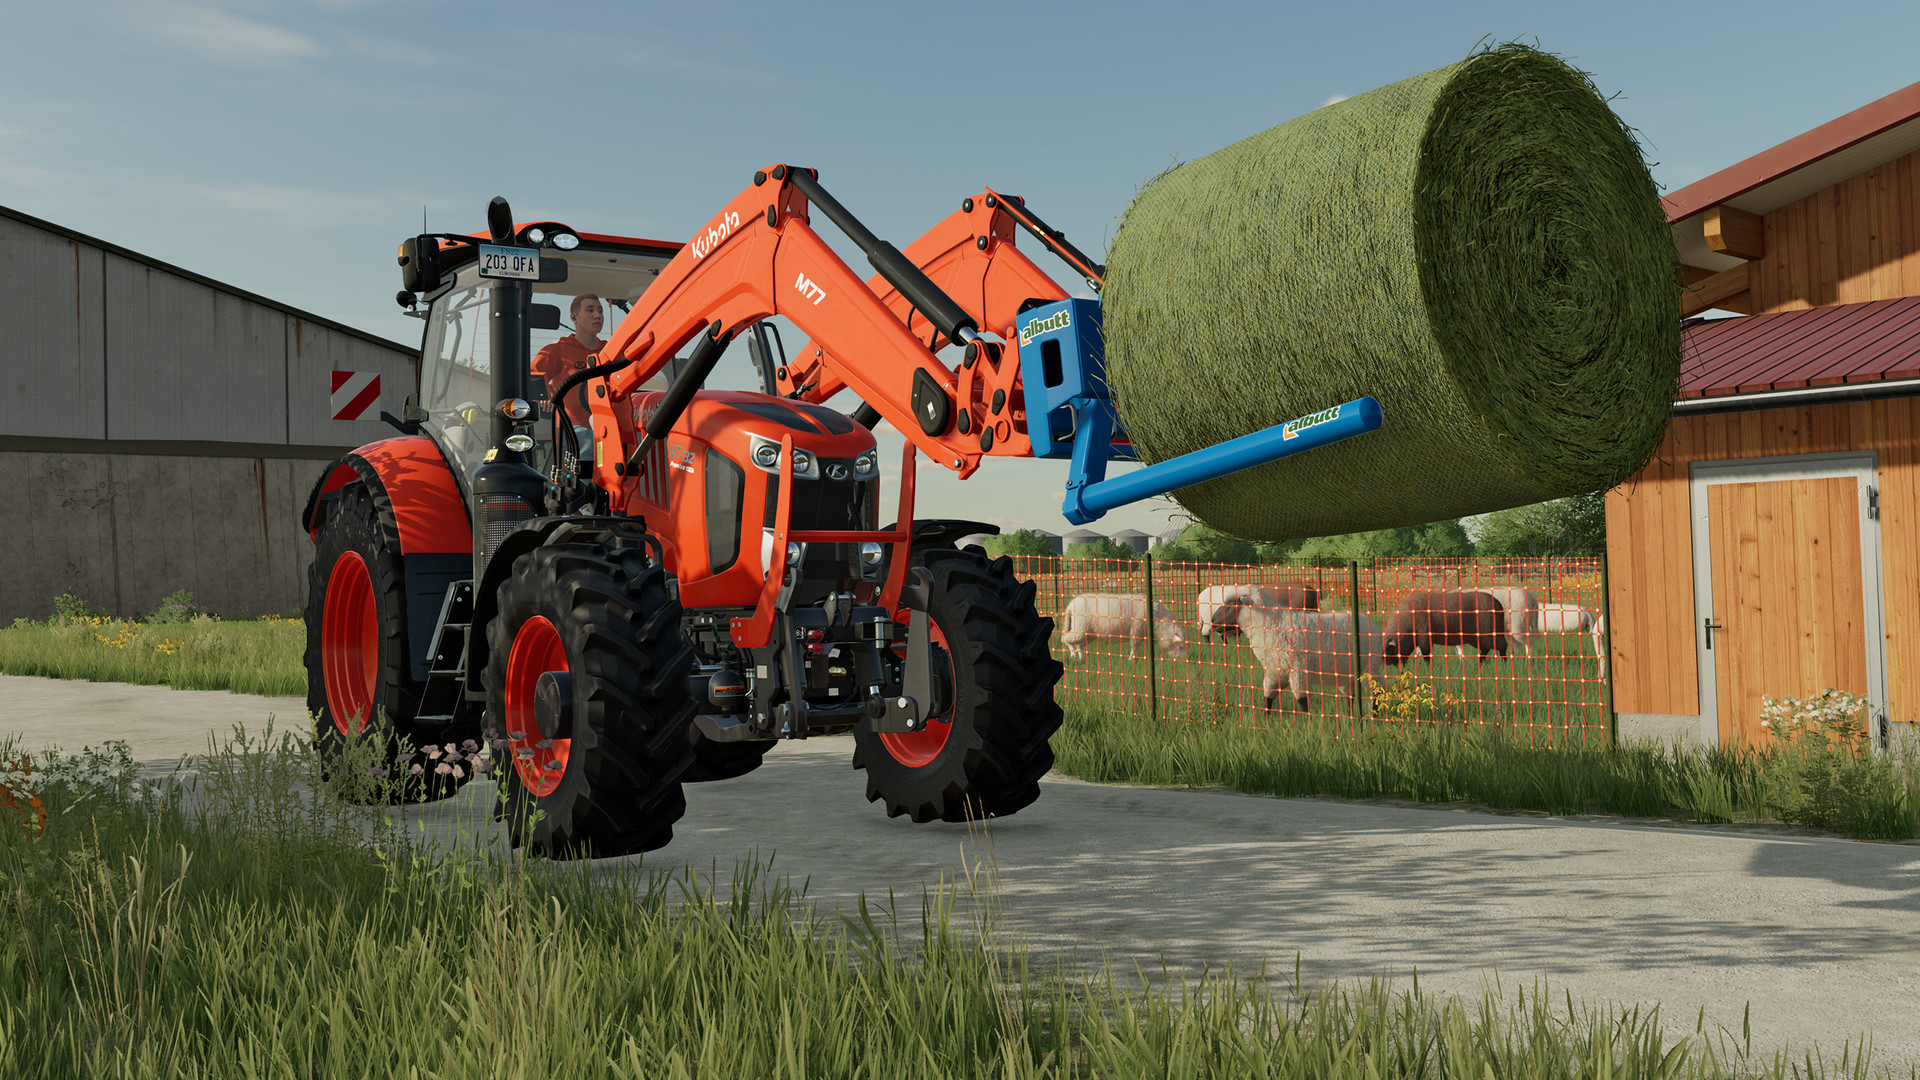 Farming Simulator 22 - Kubota Pack - GIANTS